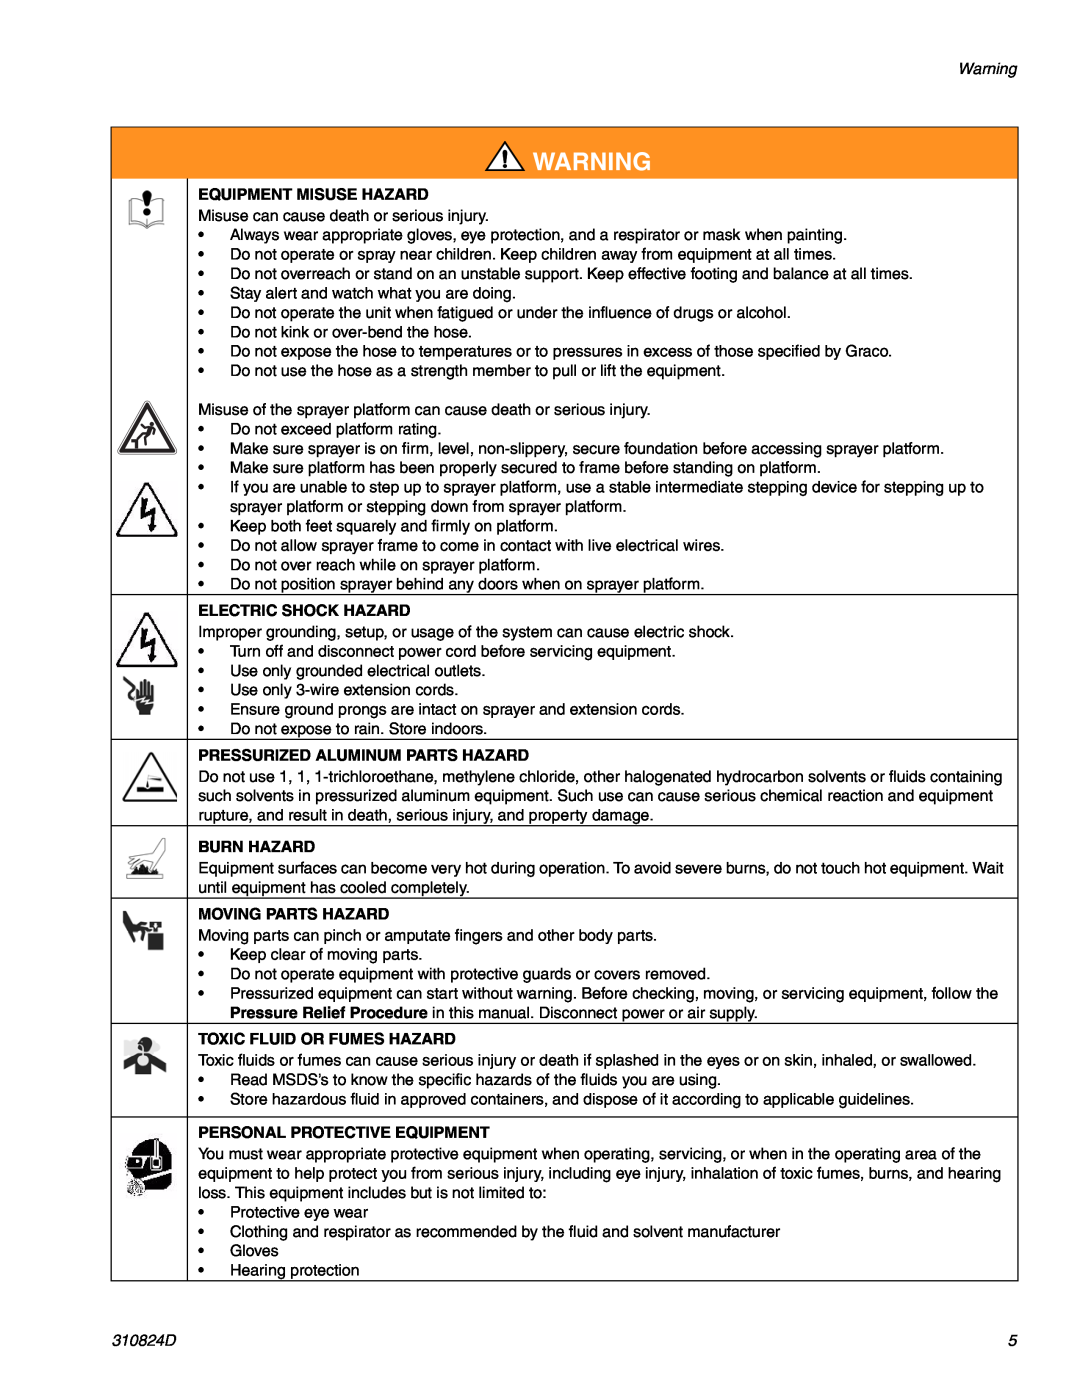 Graco Inc 256481 Equipment Misuse Hazard, Electric Shock Hazard, Pressurized Aluminum Parts Hazard, Burn Hazard, 310824D 